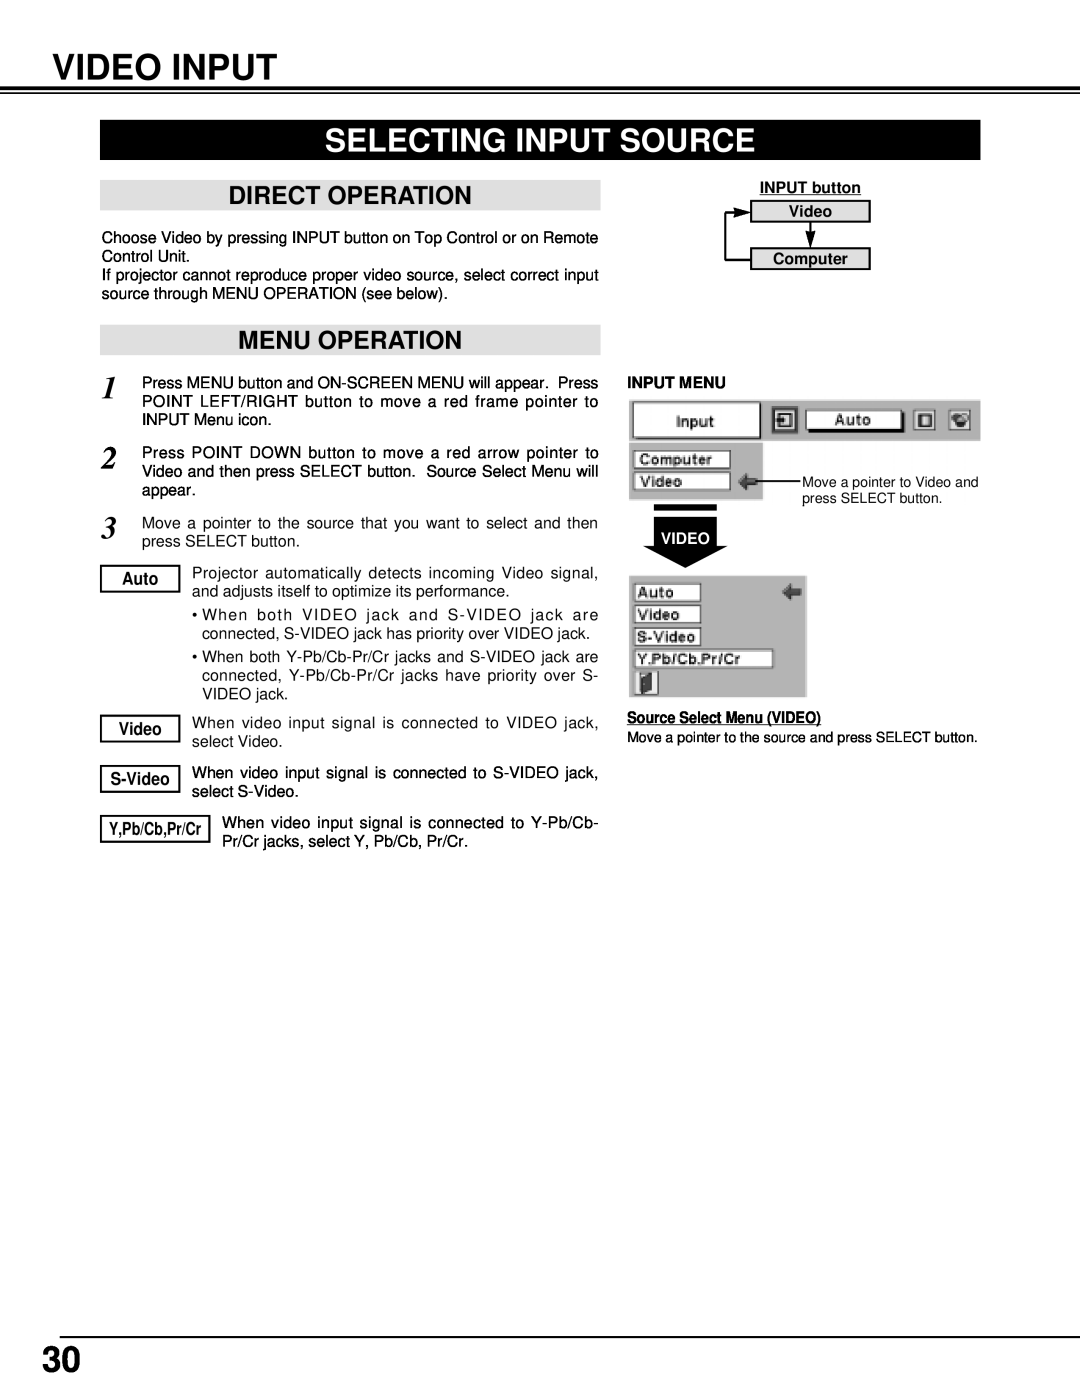 BOXLIGHT cp-12t manual Video Input, Selecting Input Source, Direct Operation, Menu Operation, INPUT button Video Computer 